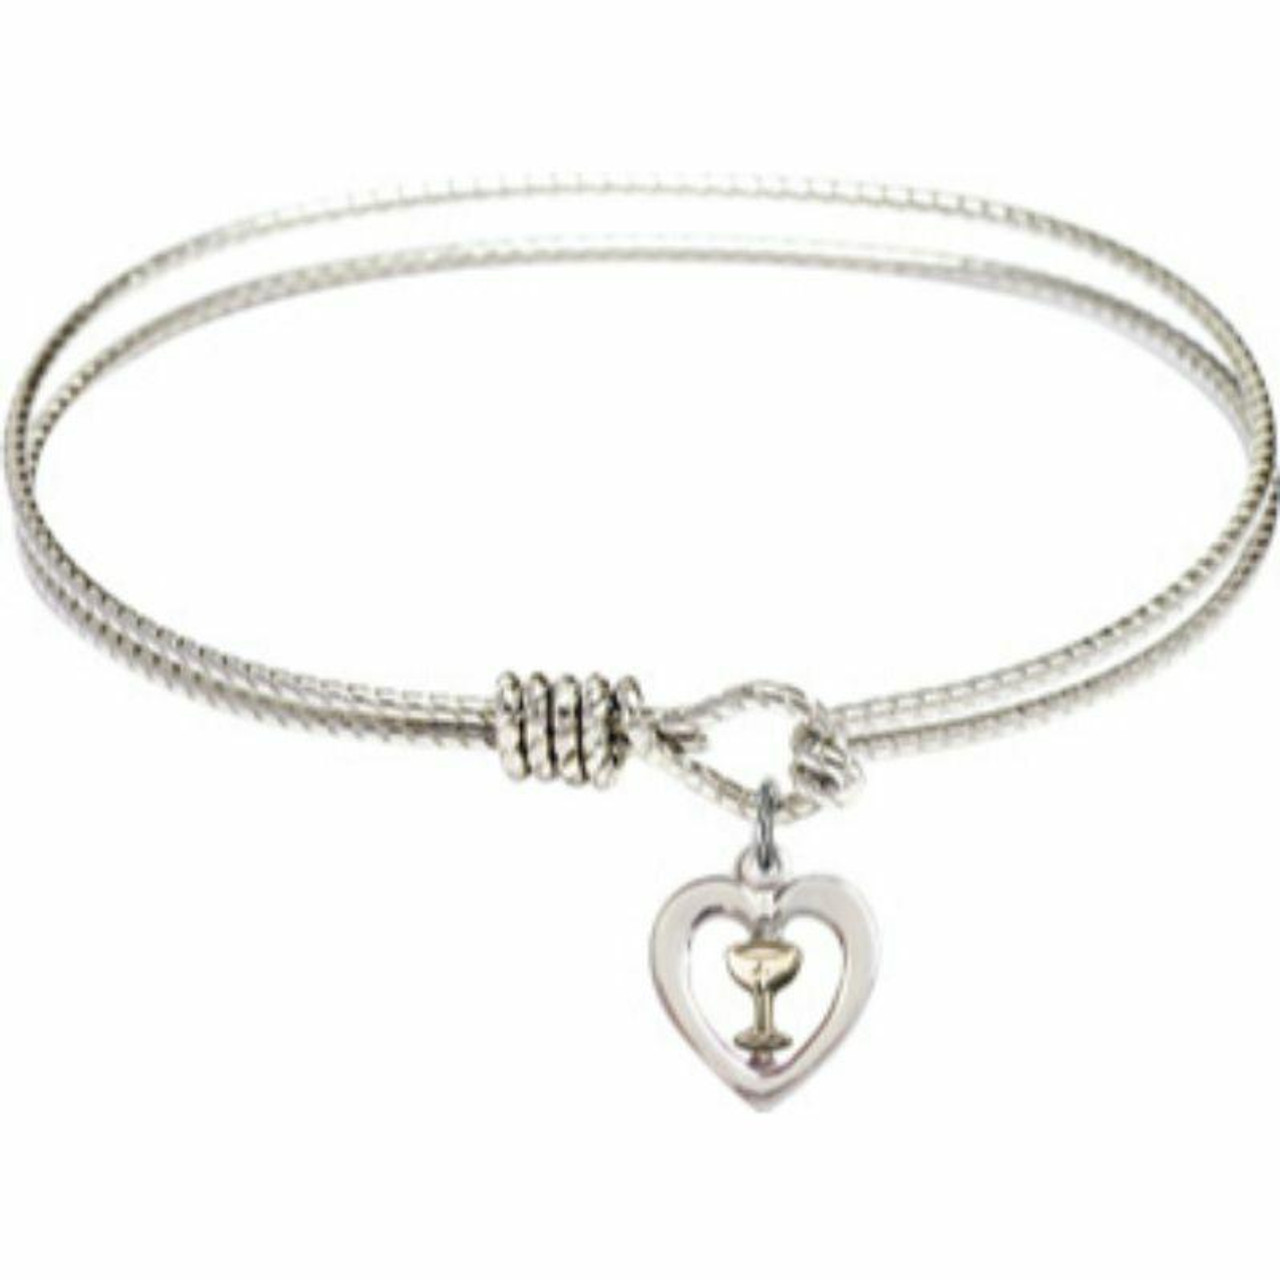 Heart & Chalice Round Eye Hook Bangle Bracelet - Gold-Filled/Sterling  Silver Charm - 6.25 Inch (3148GF/SS)